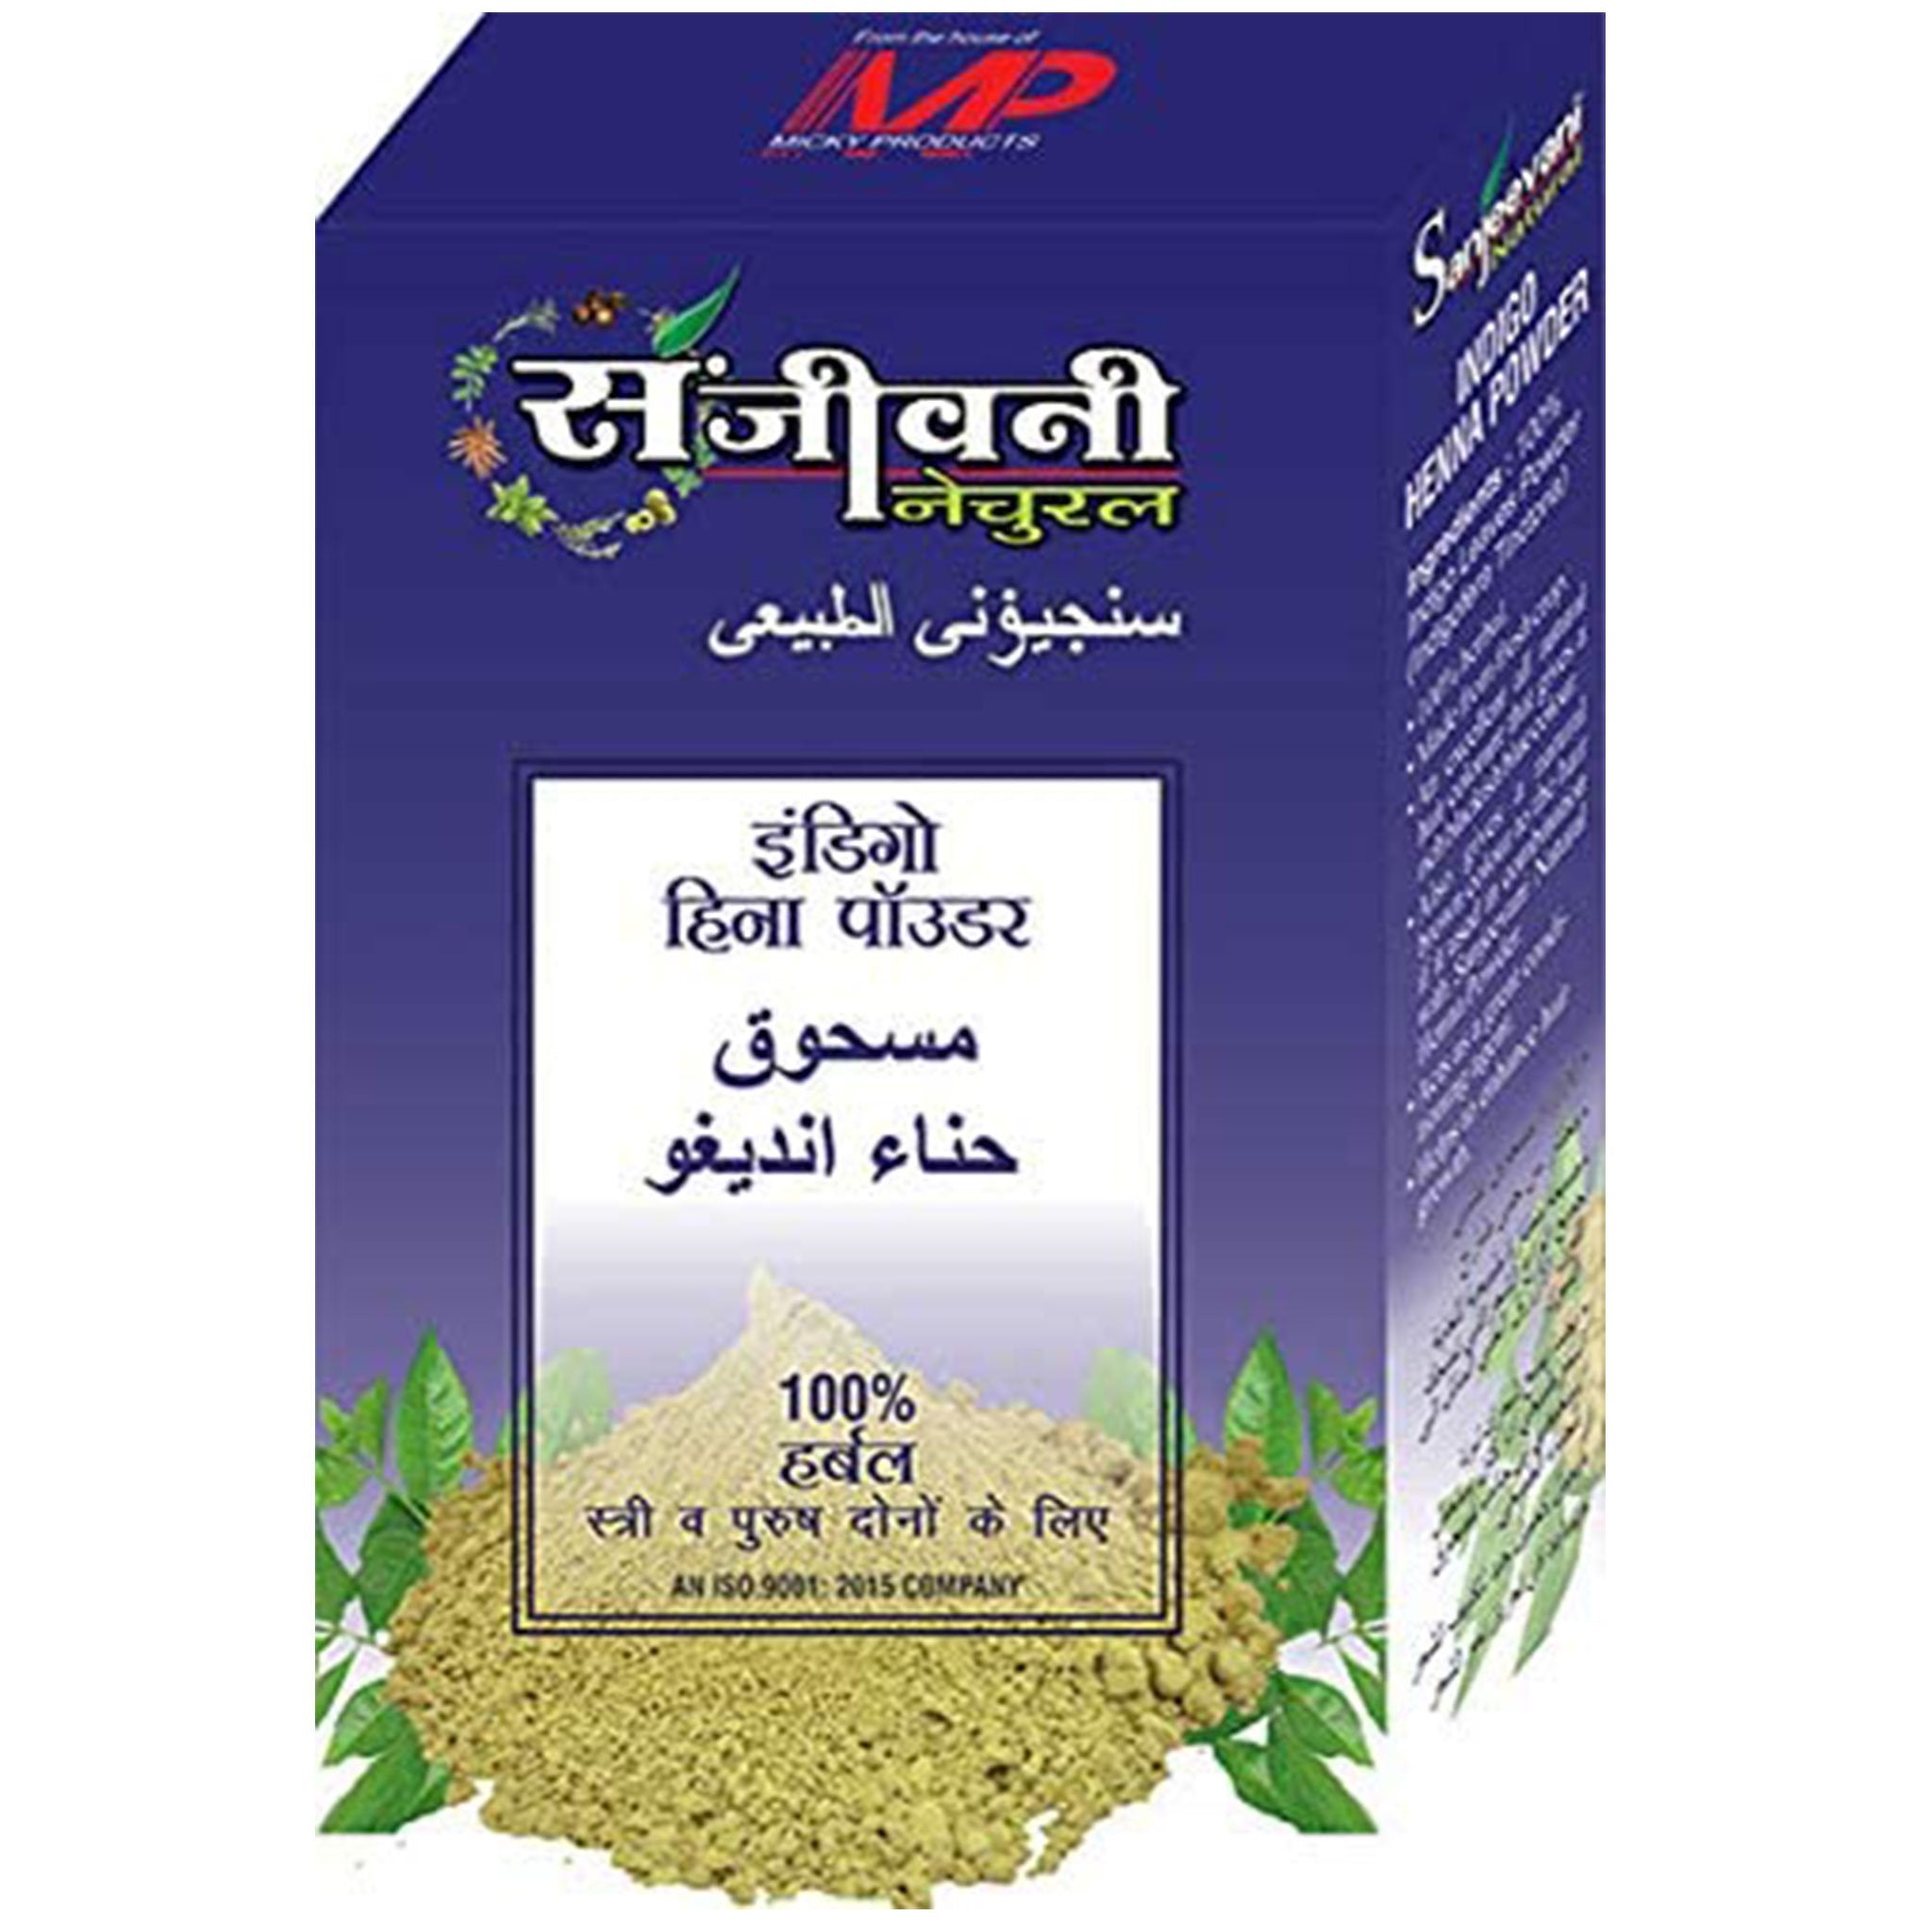 Sanjeevani Hair Powder Indigo Leaf PowderNeelamari Powder 100gm Value Pack of 12 